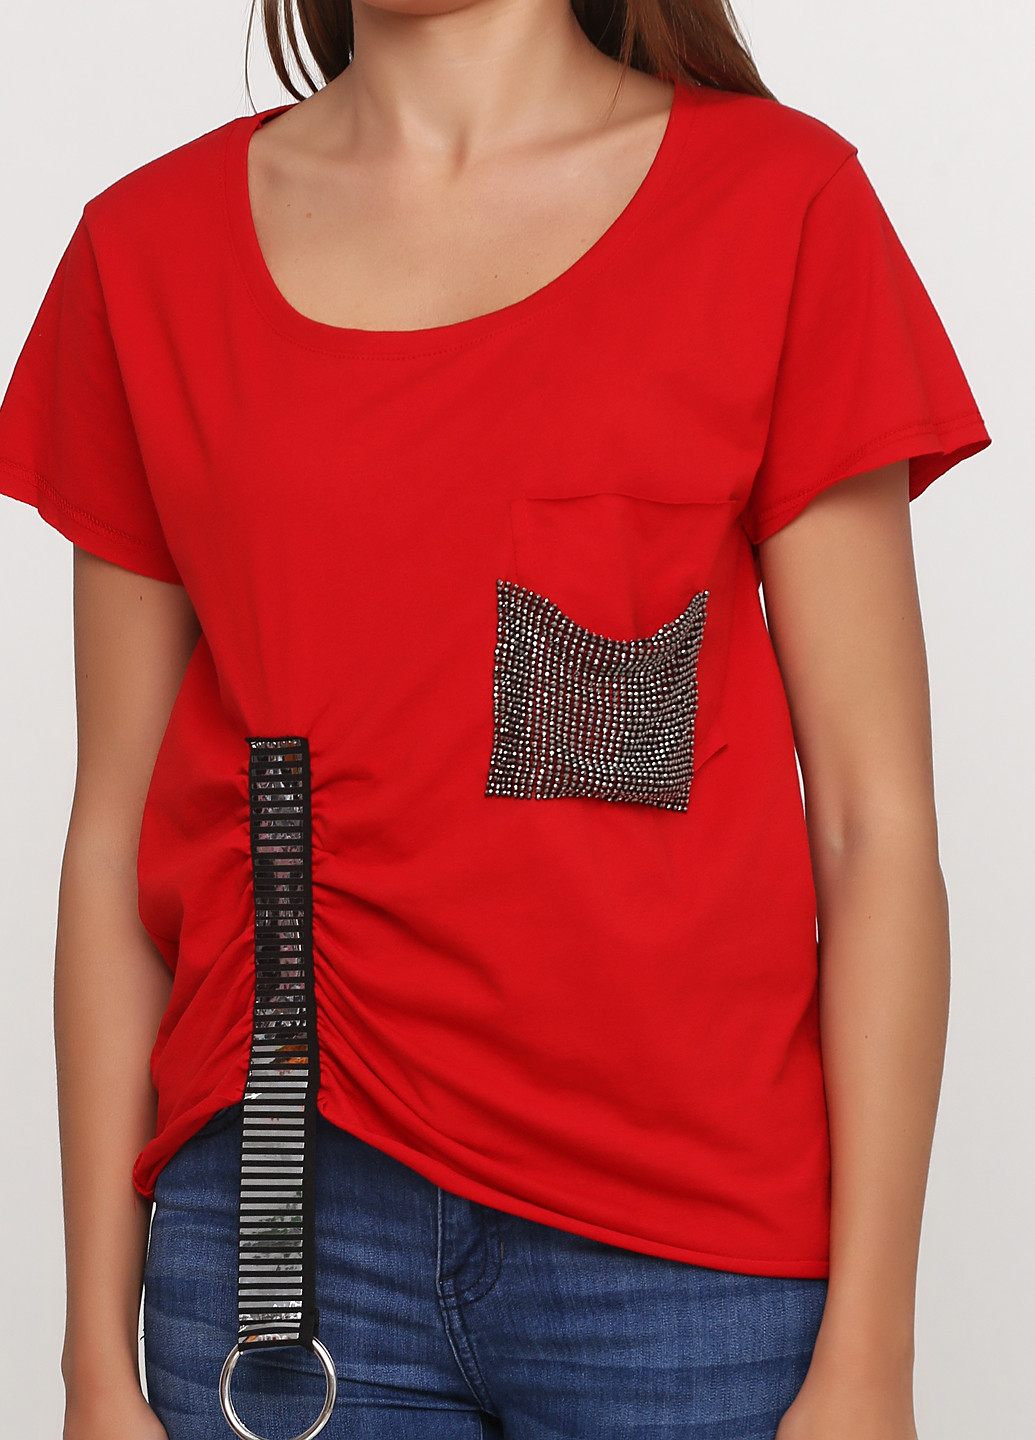 Красная летняя футболка Go Fashion